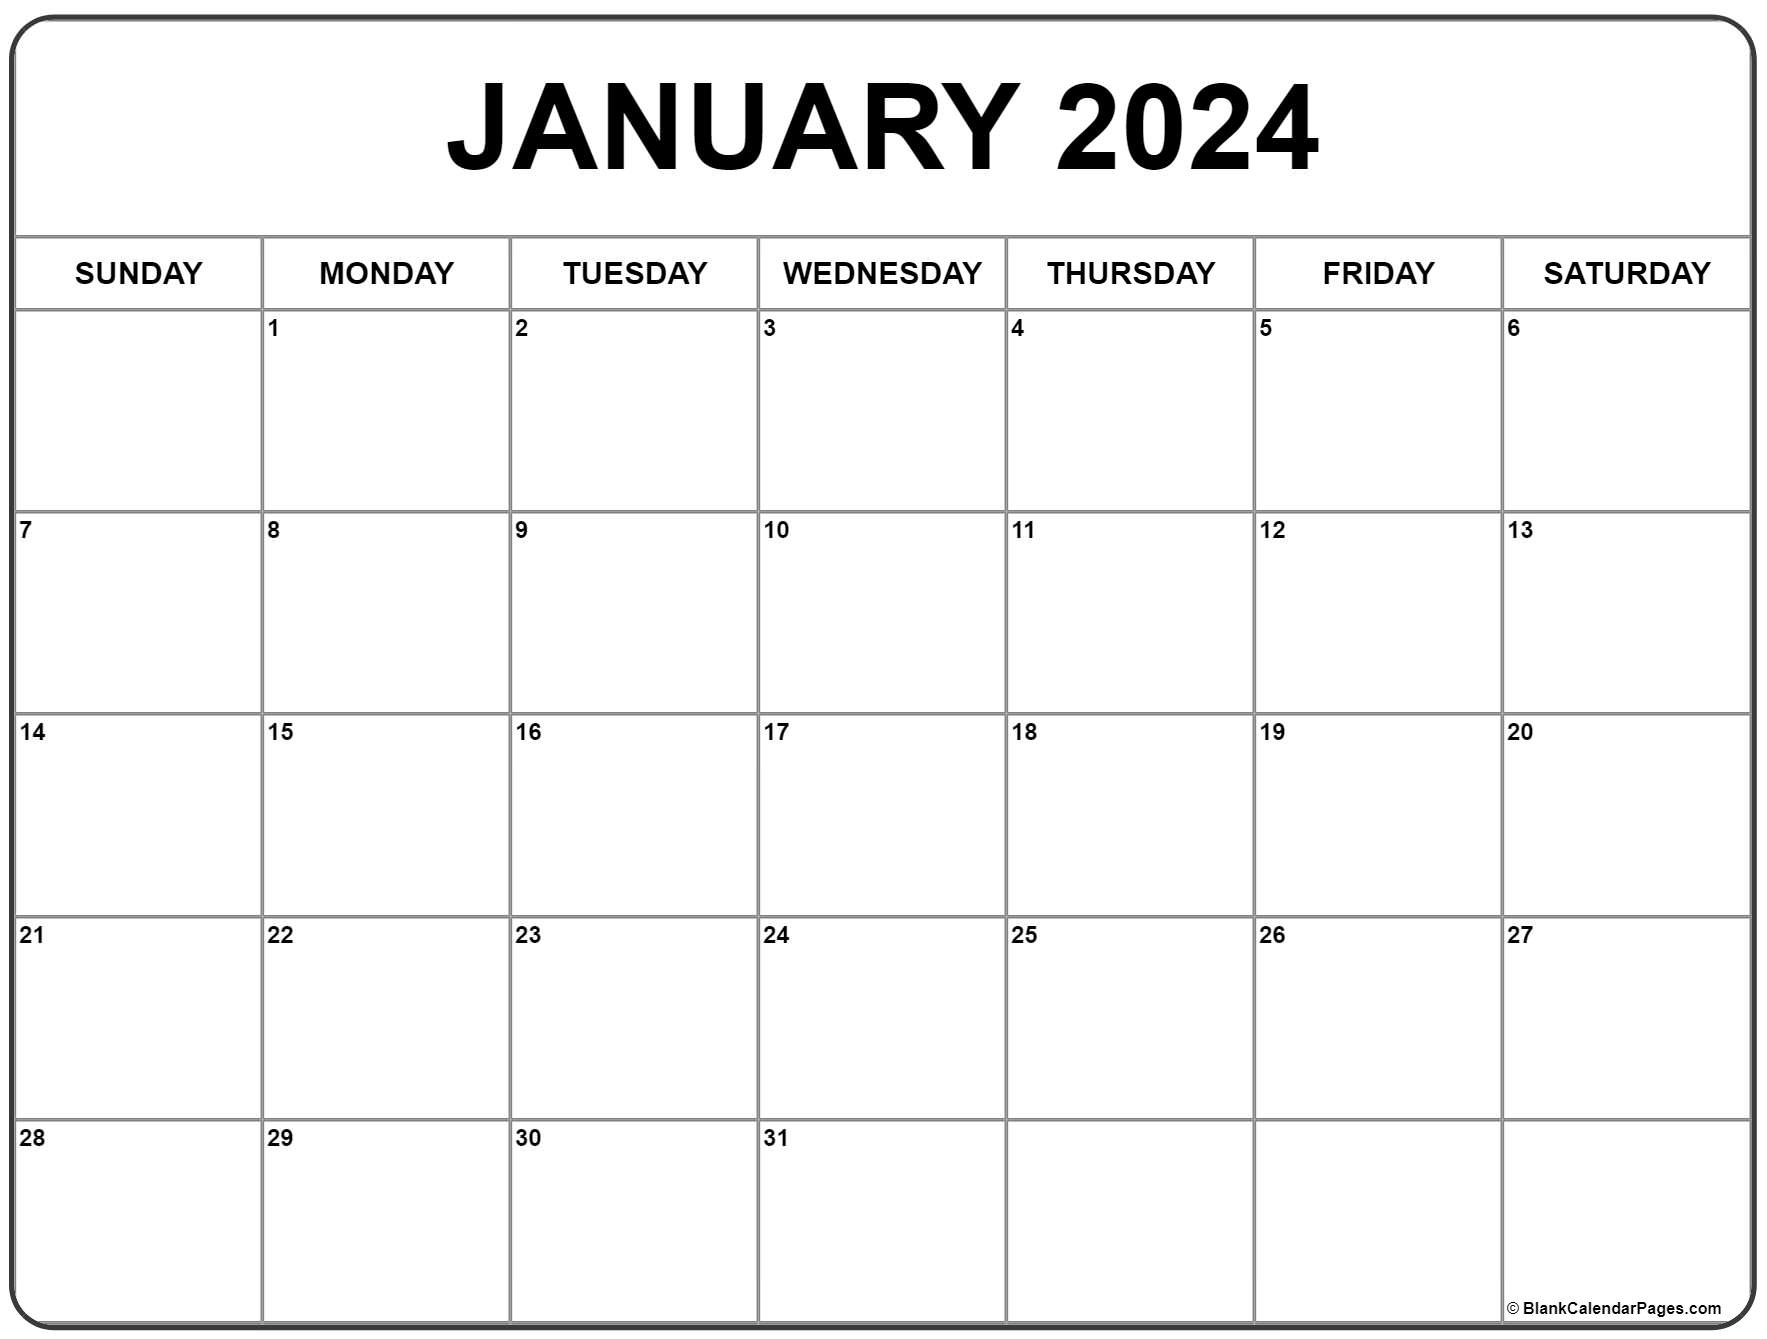 January 2024 Calendar | Free Printable Calendar for Printable Calendar For 2024 By Month